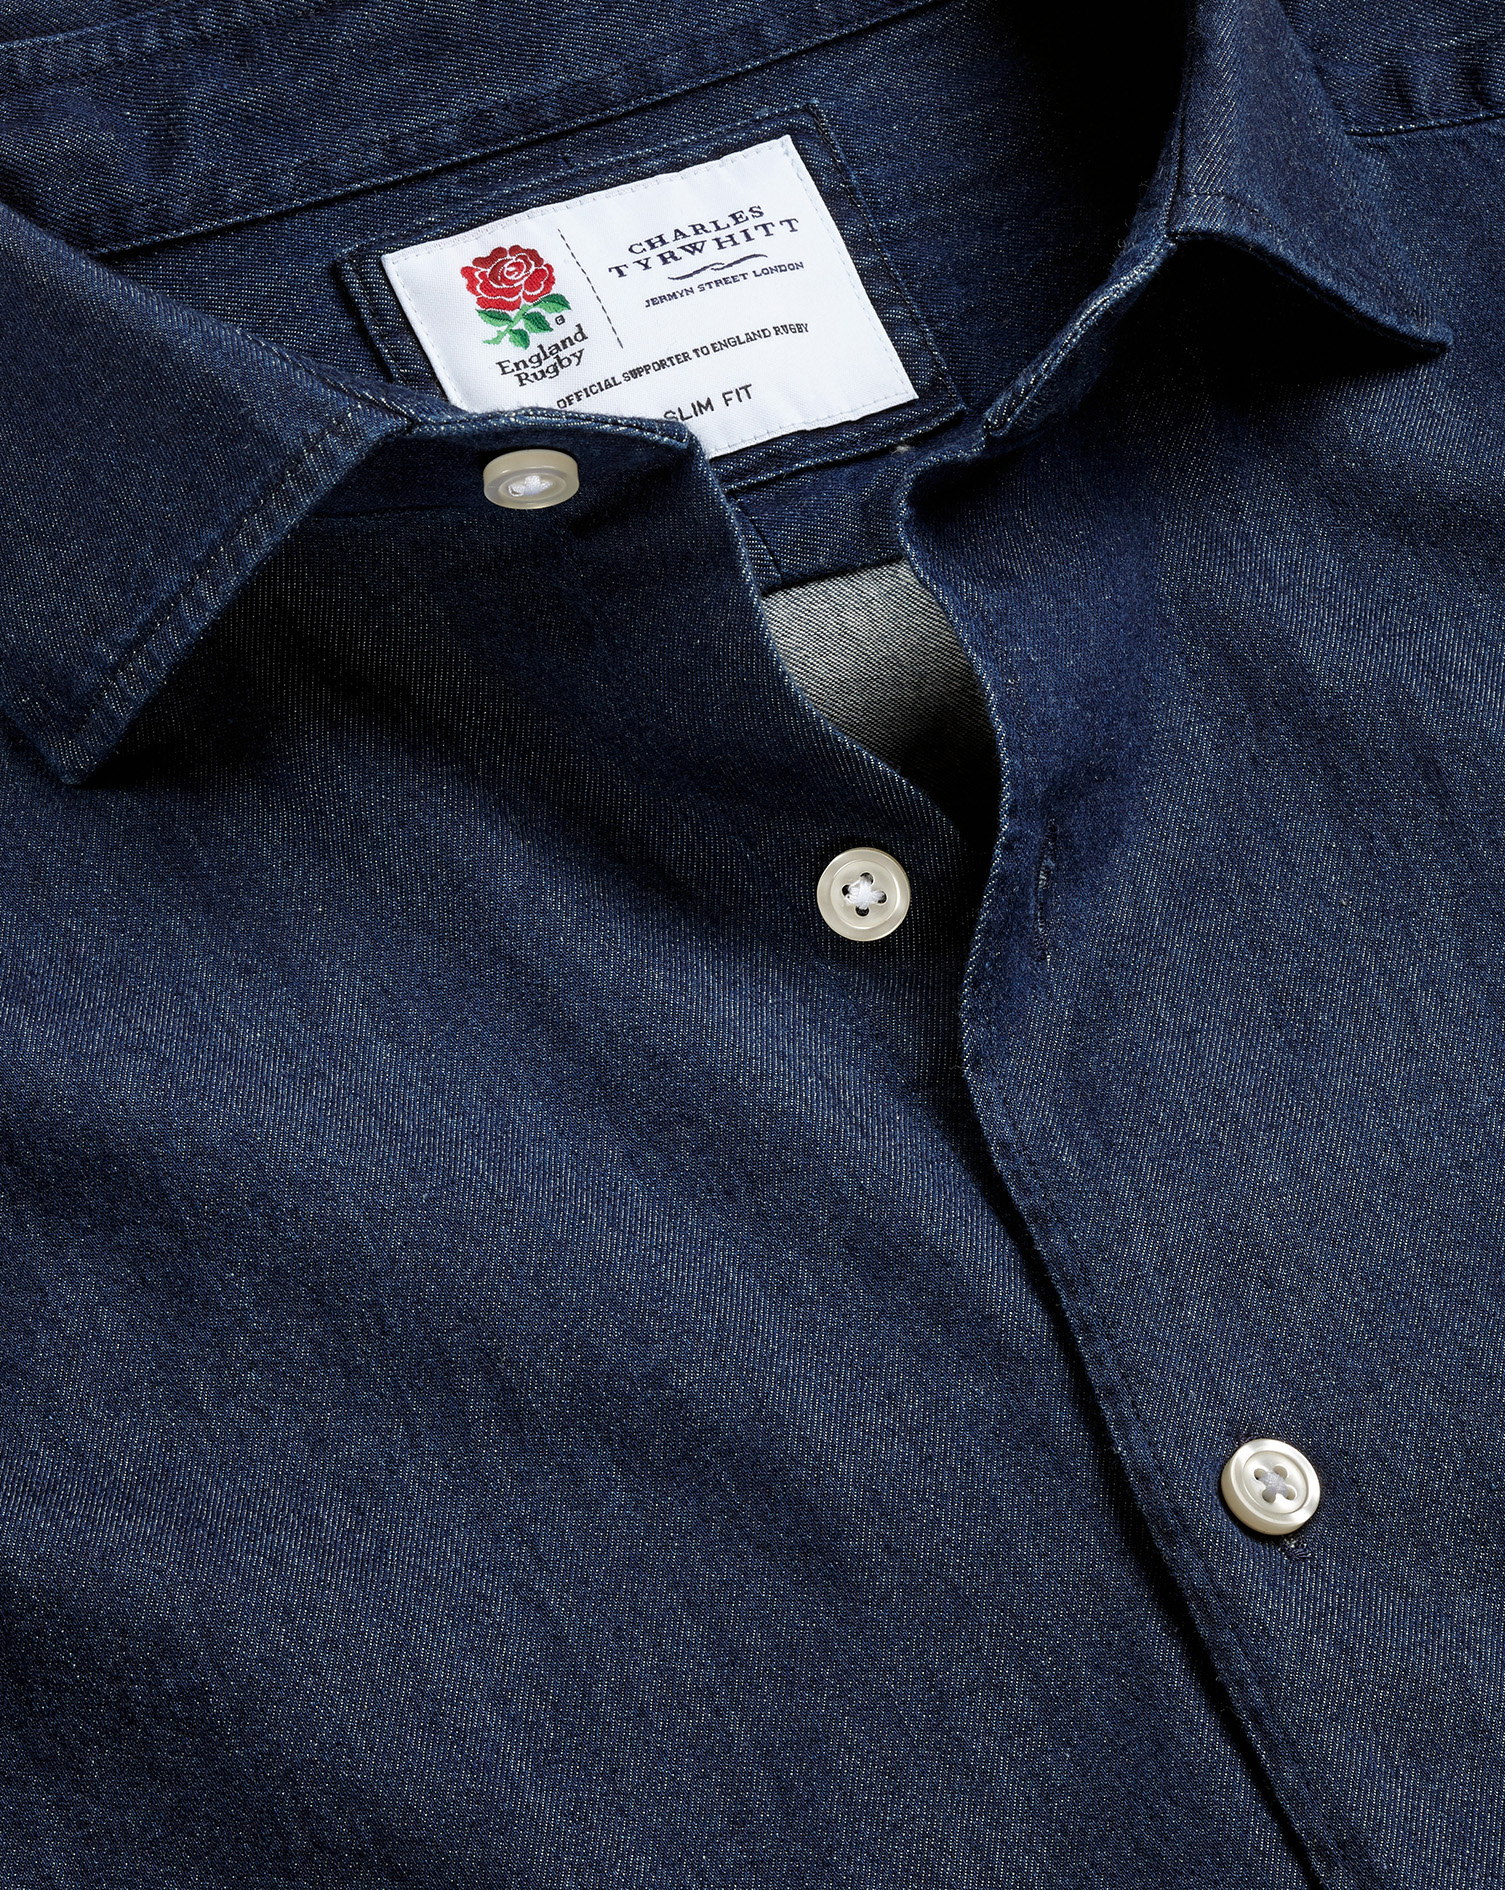 Men's Charles Tyrwhitt England Rugby Denim Shirt - Denim Blue Single Cuff Size Large Cotton
